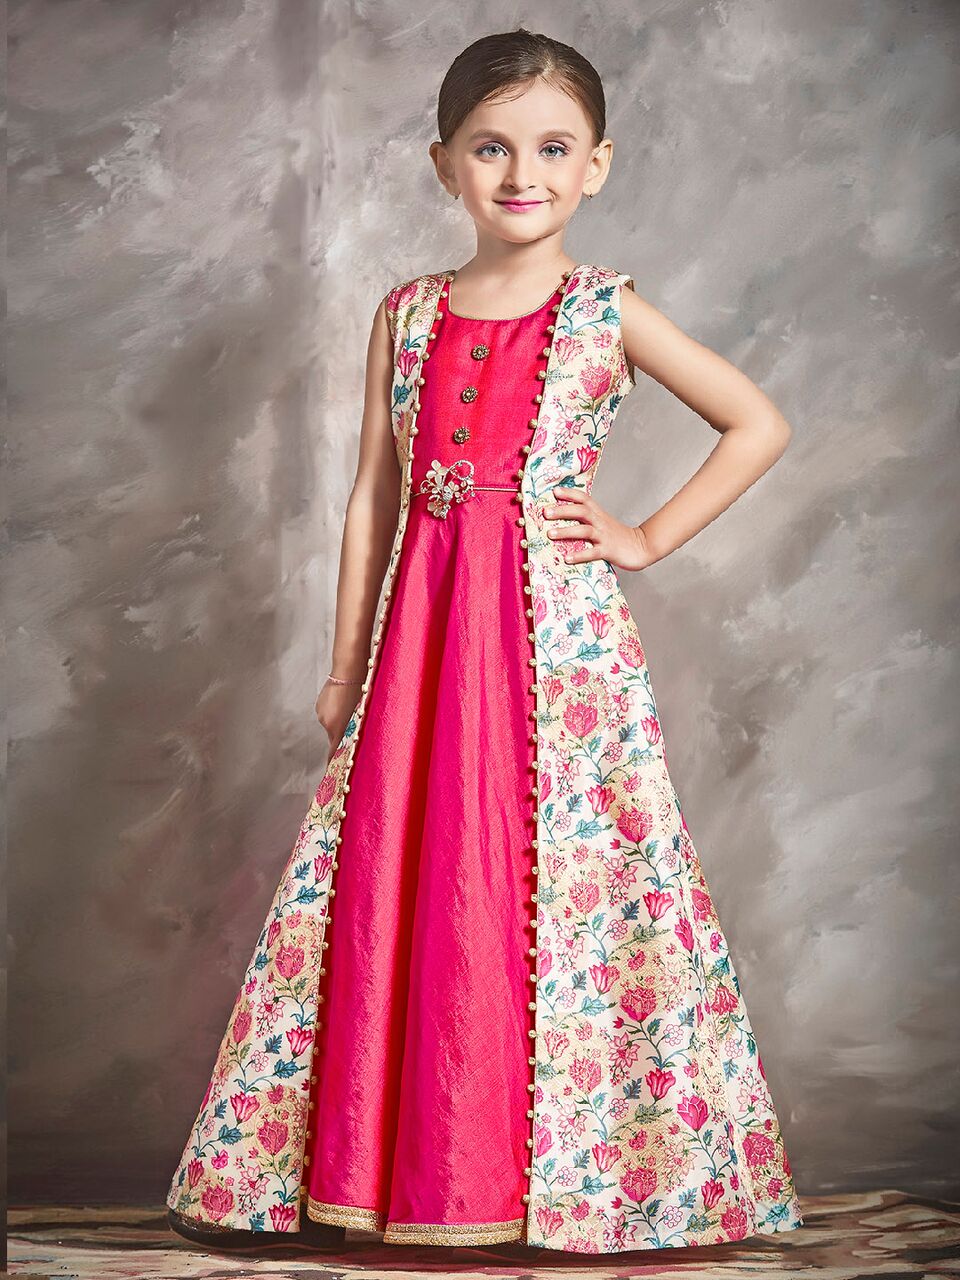 designer gown dresses gowns frock boutique frocks elegant pink wear mansi shree young gunjfashion interested